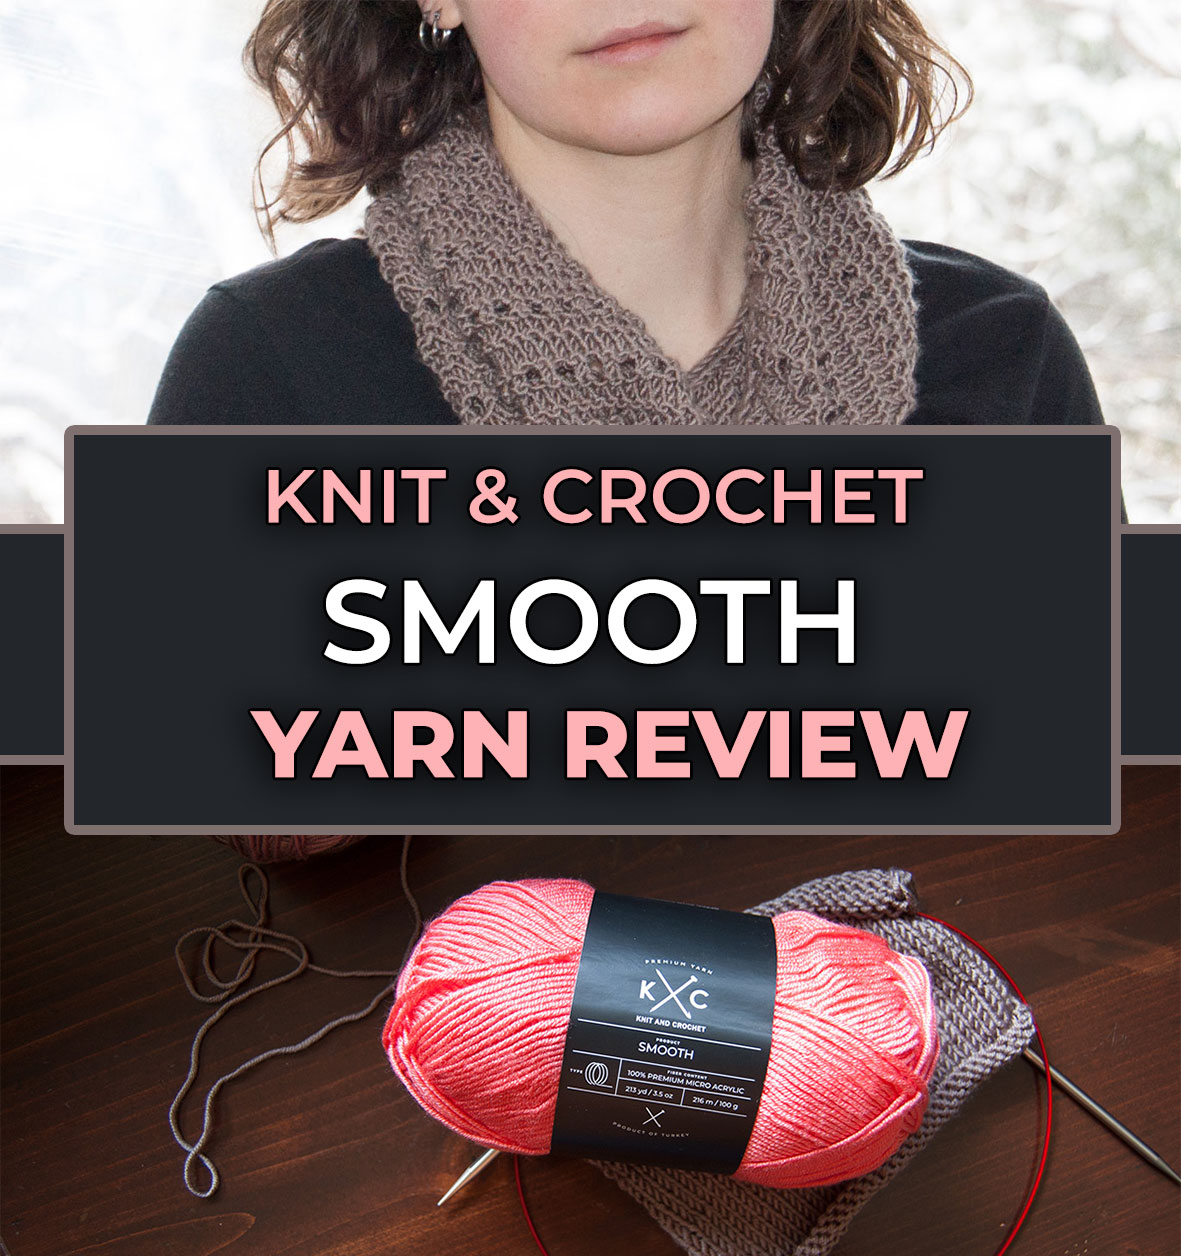 K+C Smooth Yarn Review - My New Favorite! - Budget Yarn Reviews